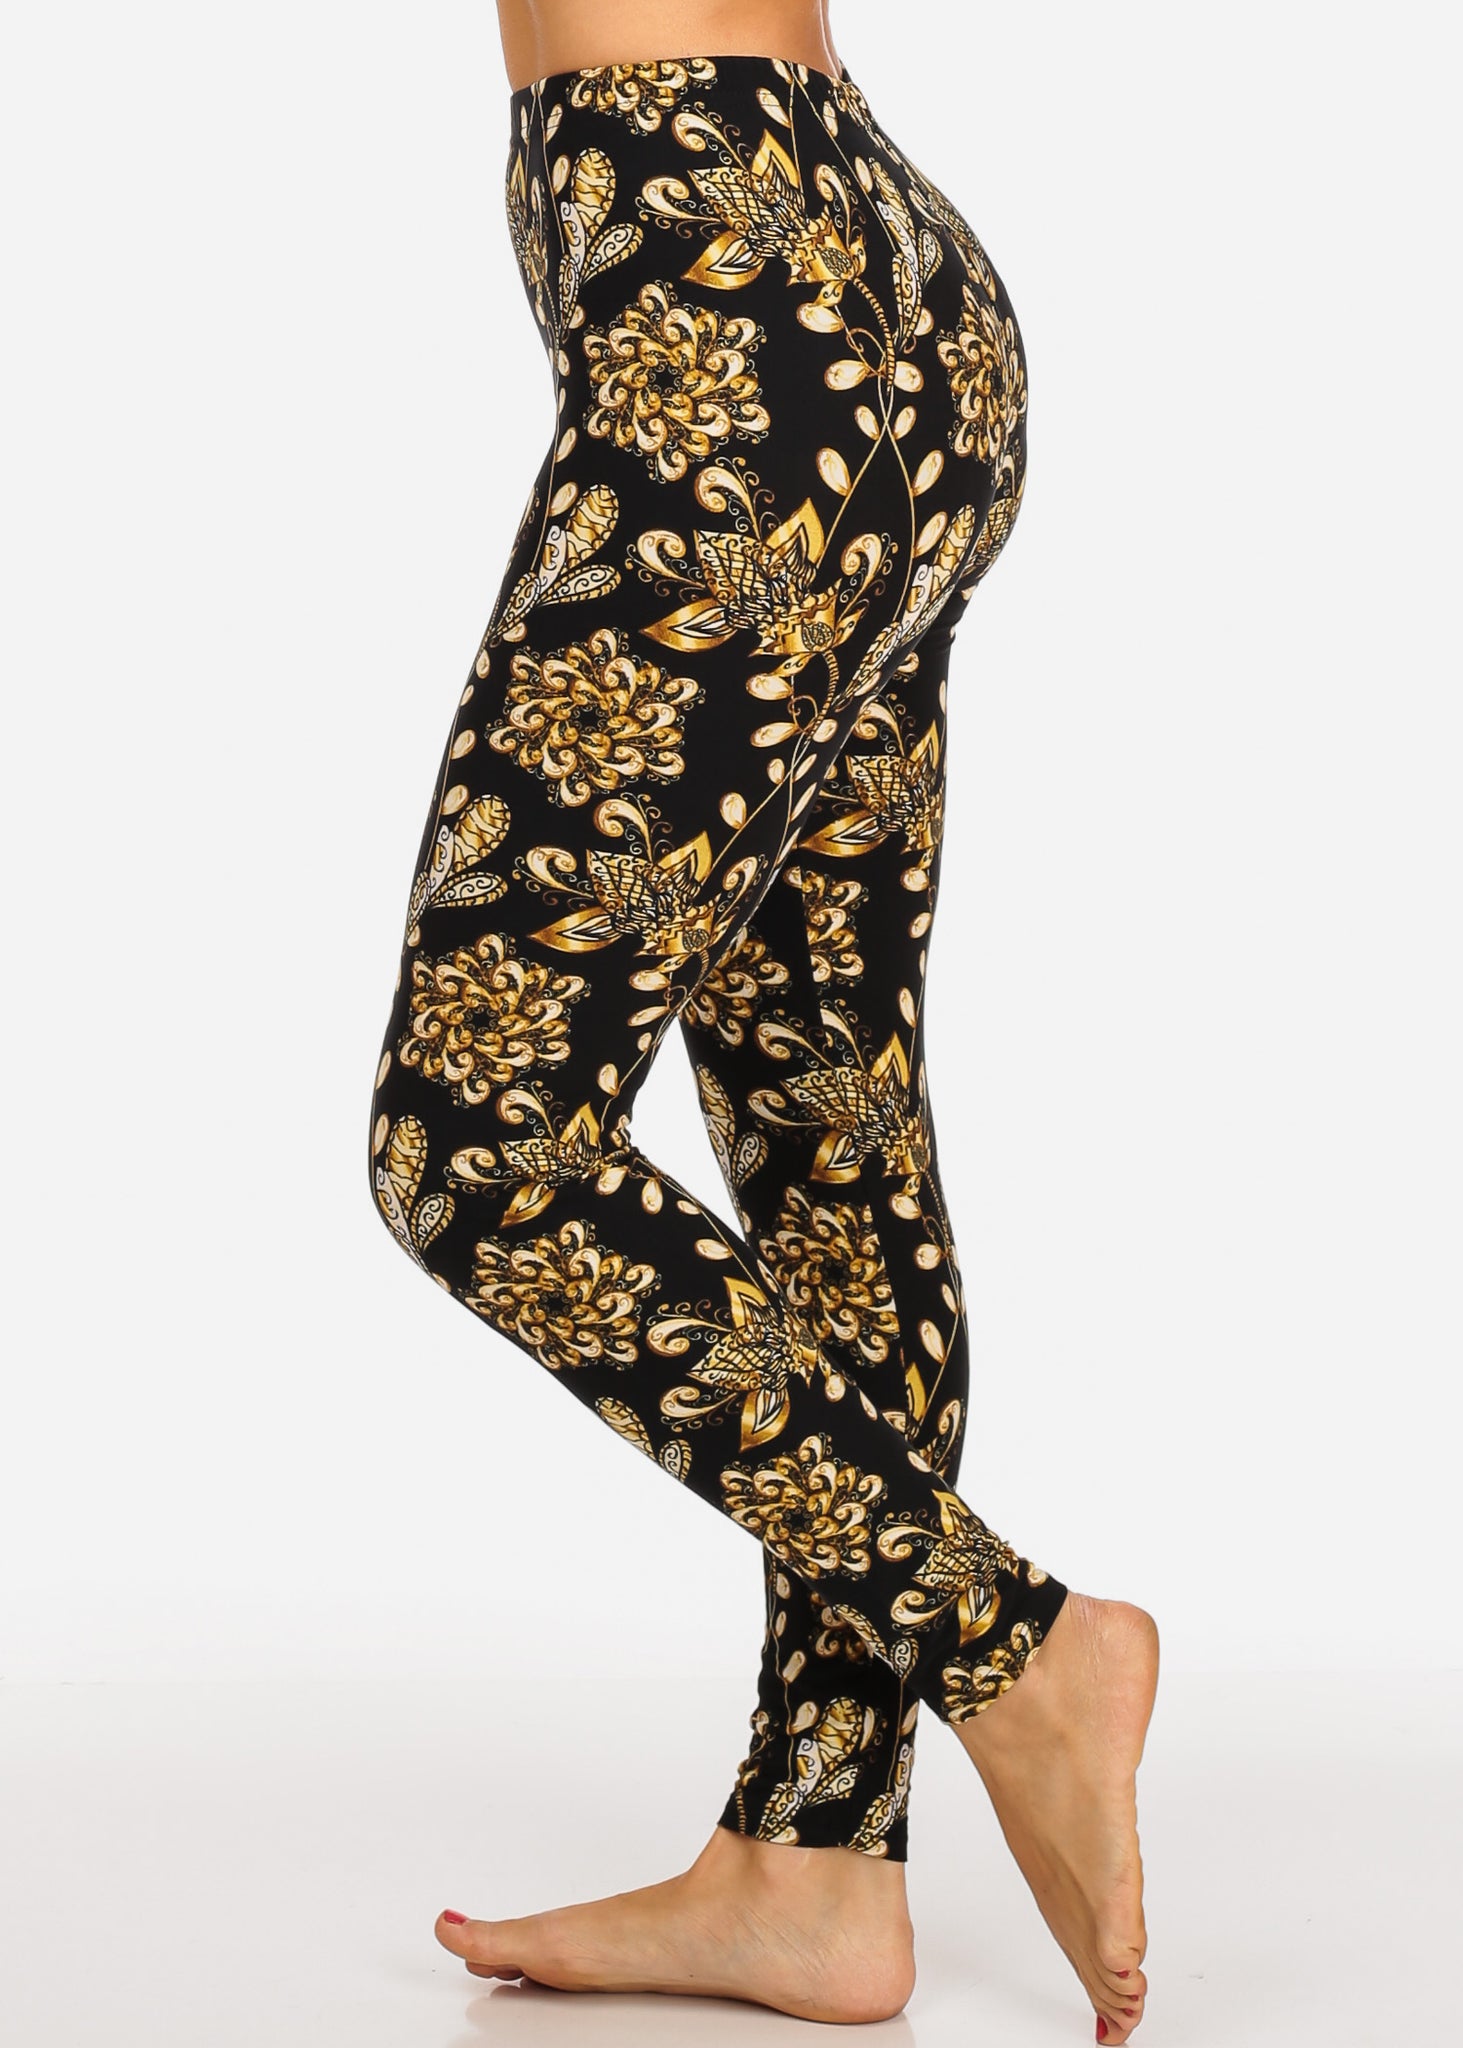 Gold Pattern Design Multi Color Women's Leggings Skinny Leg PantS